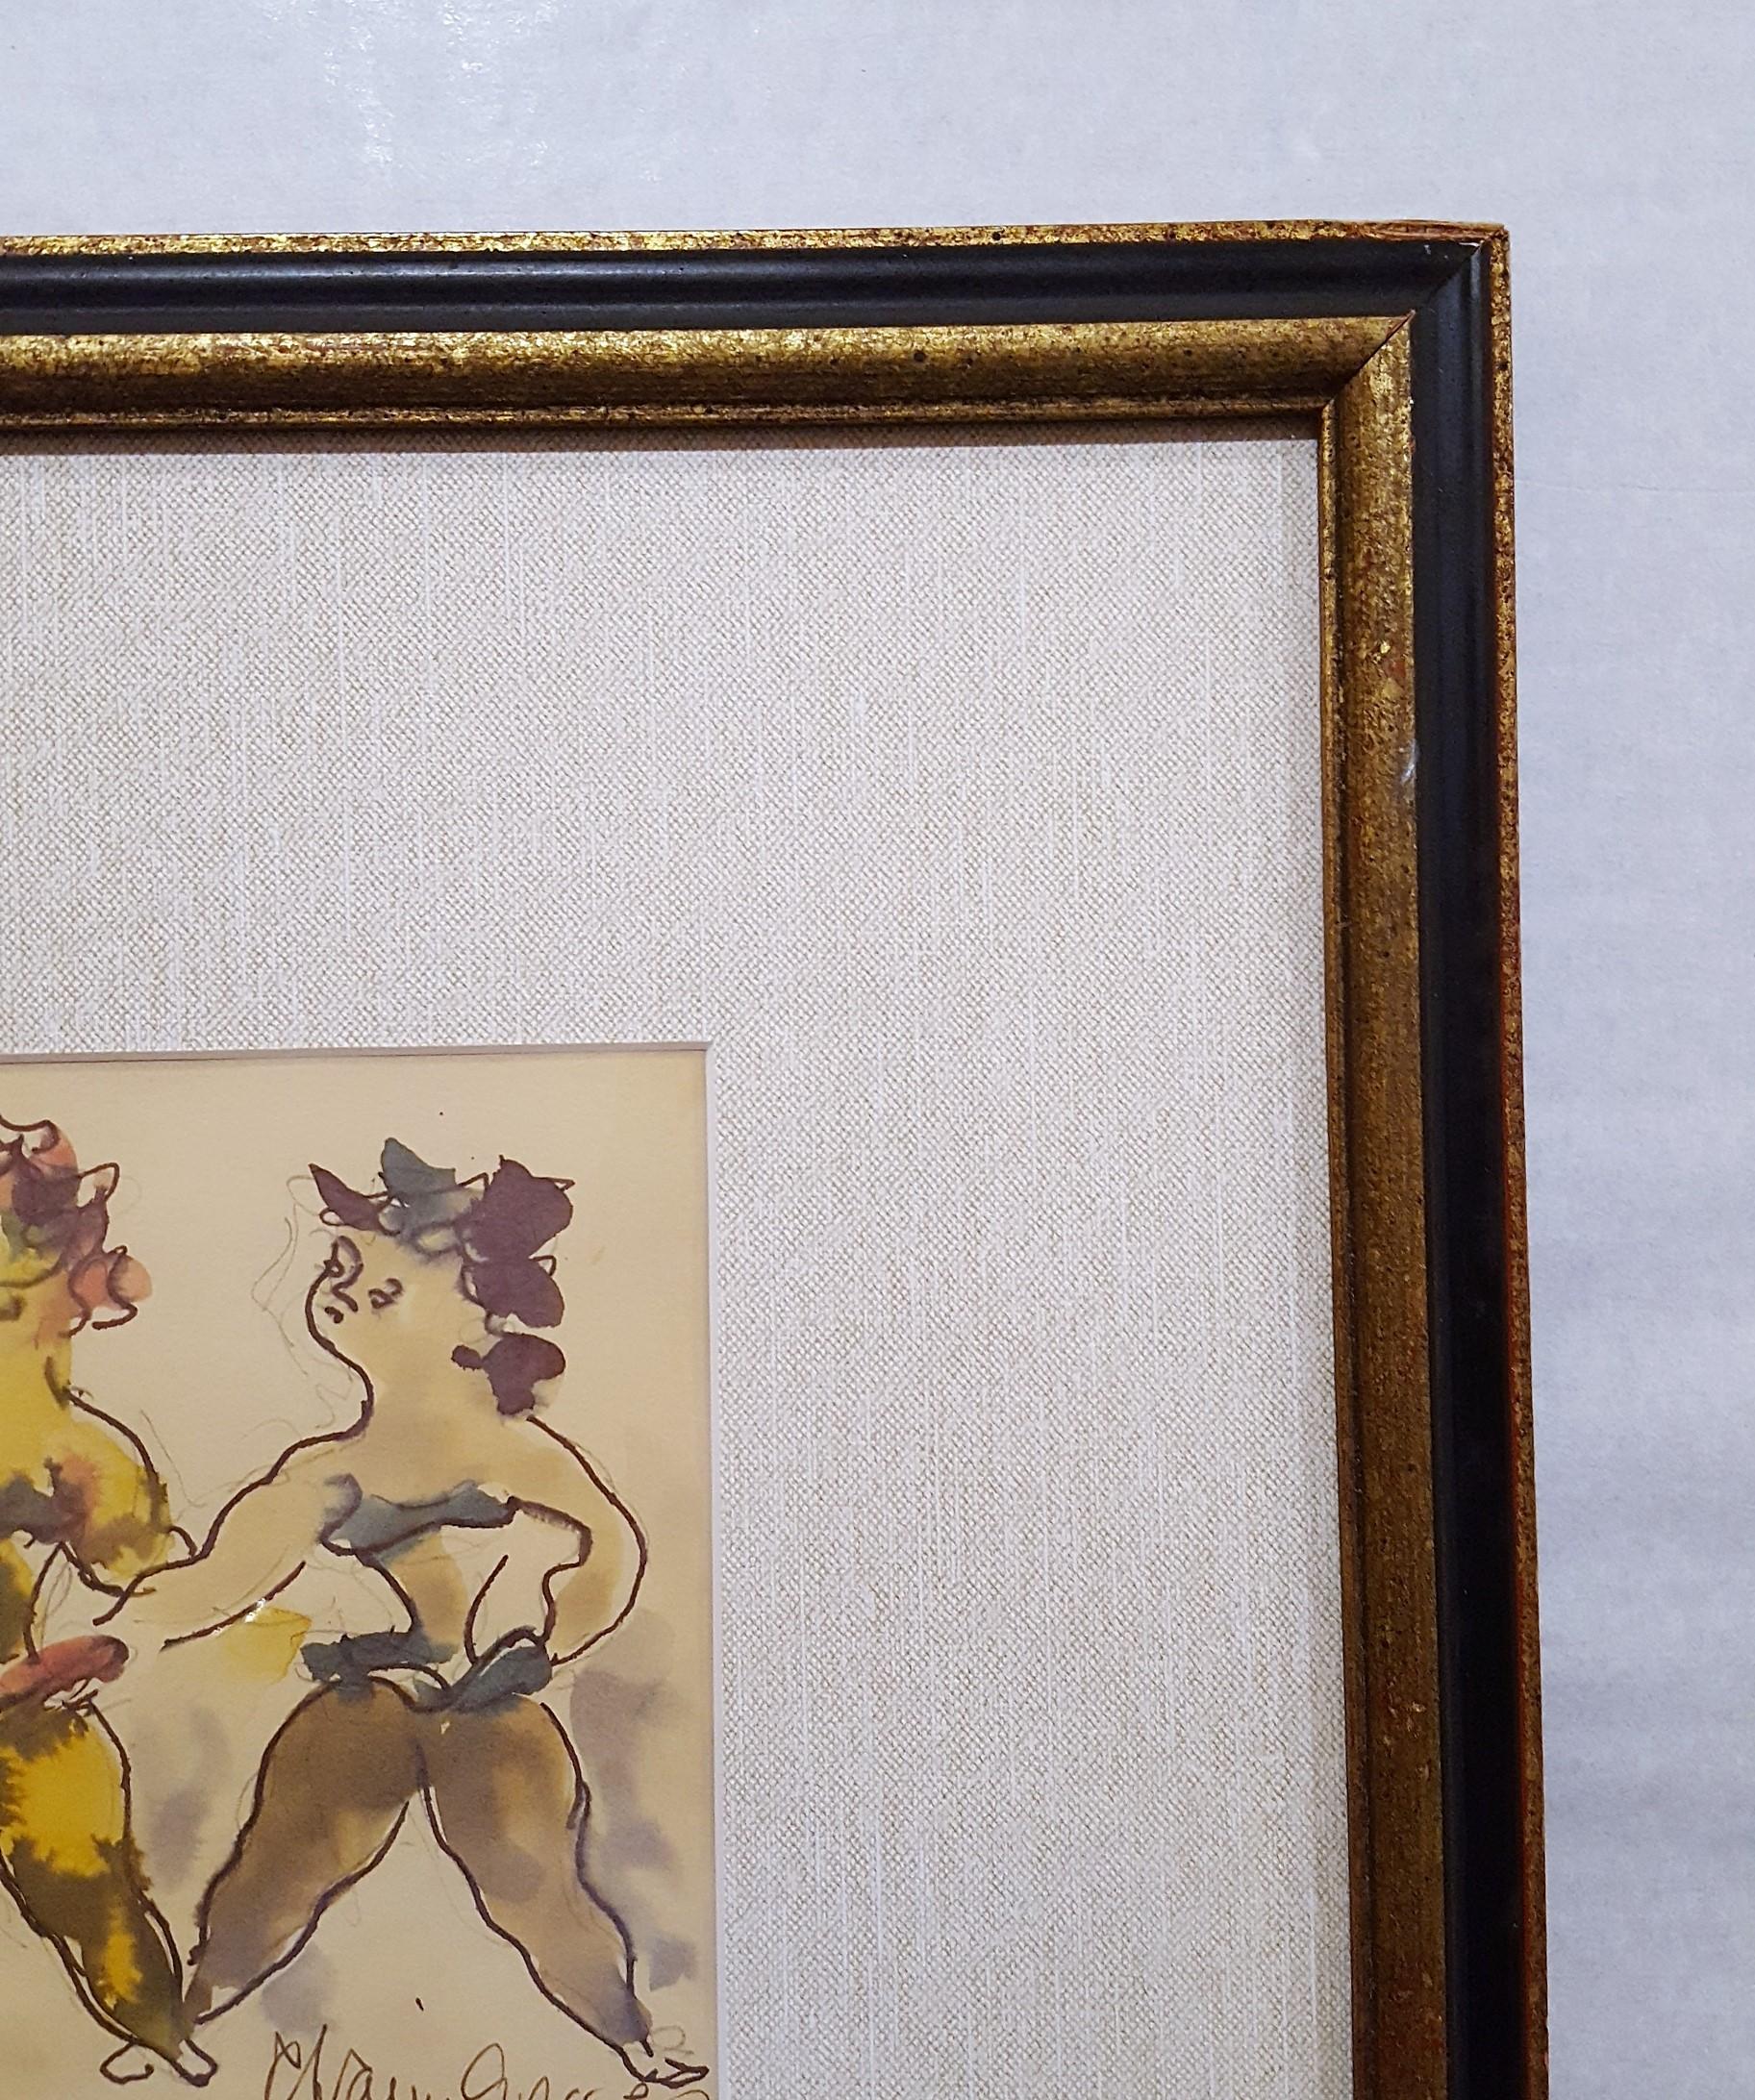 Seven Dancing Acrobats /// Modern Art Chaim Gross Watercolor Figurative Drawing 3